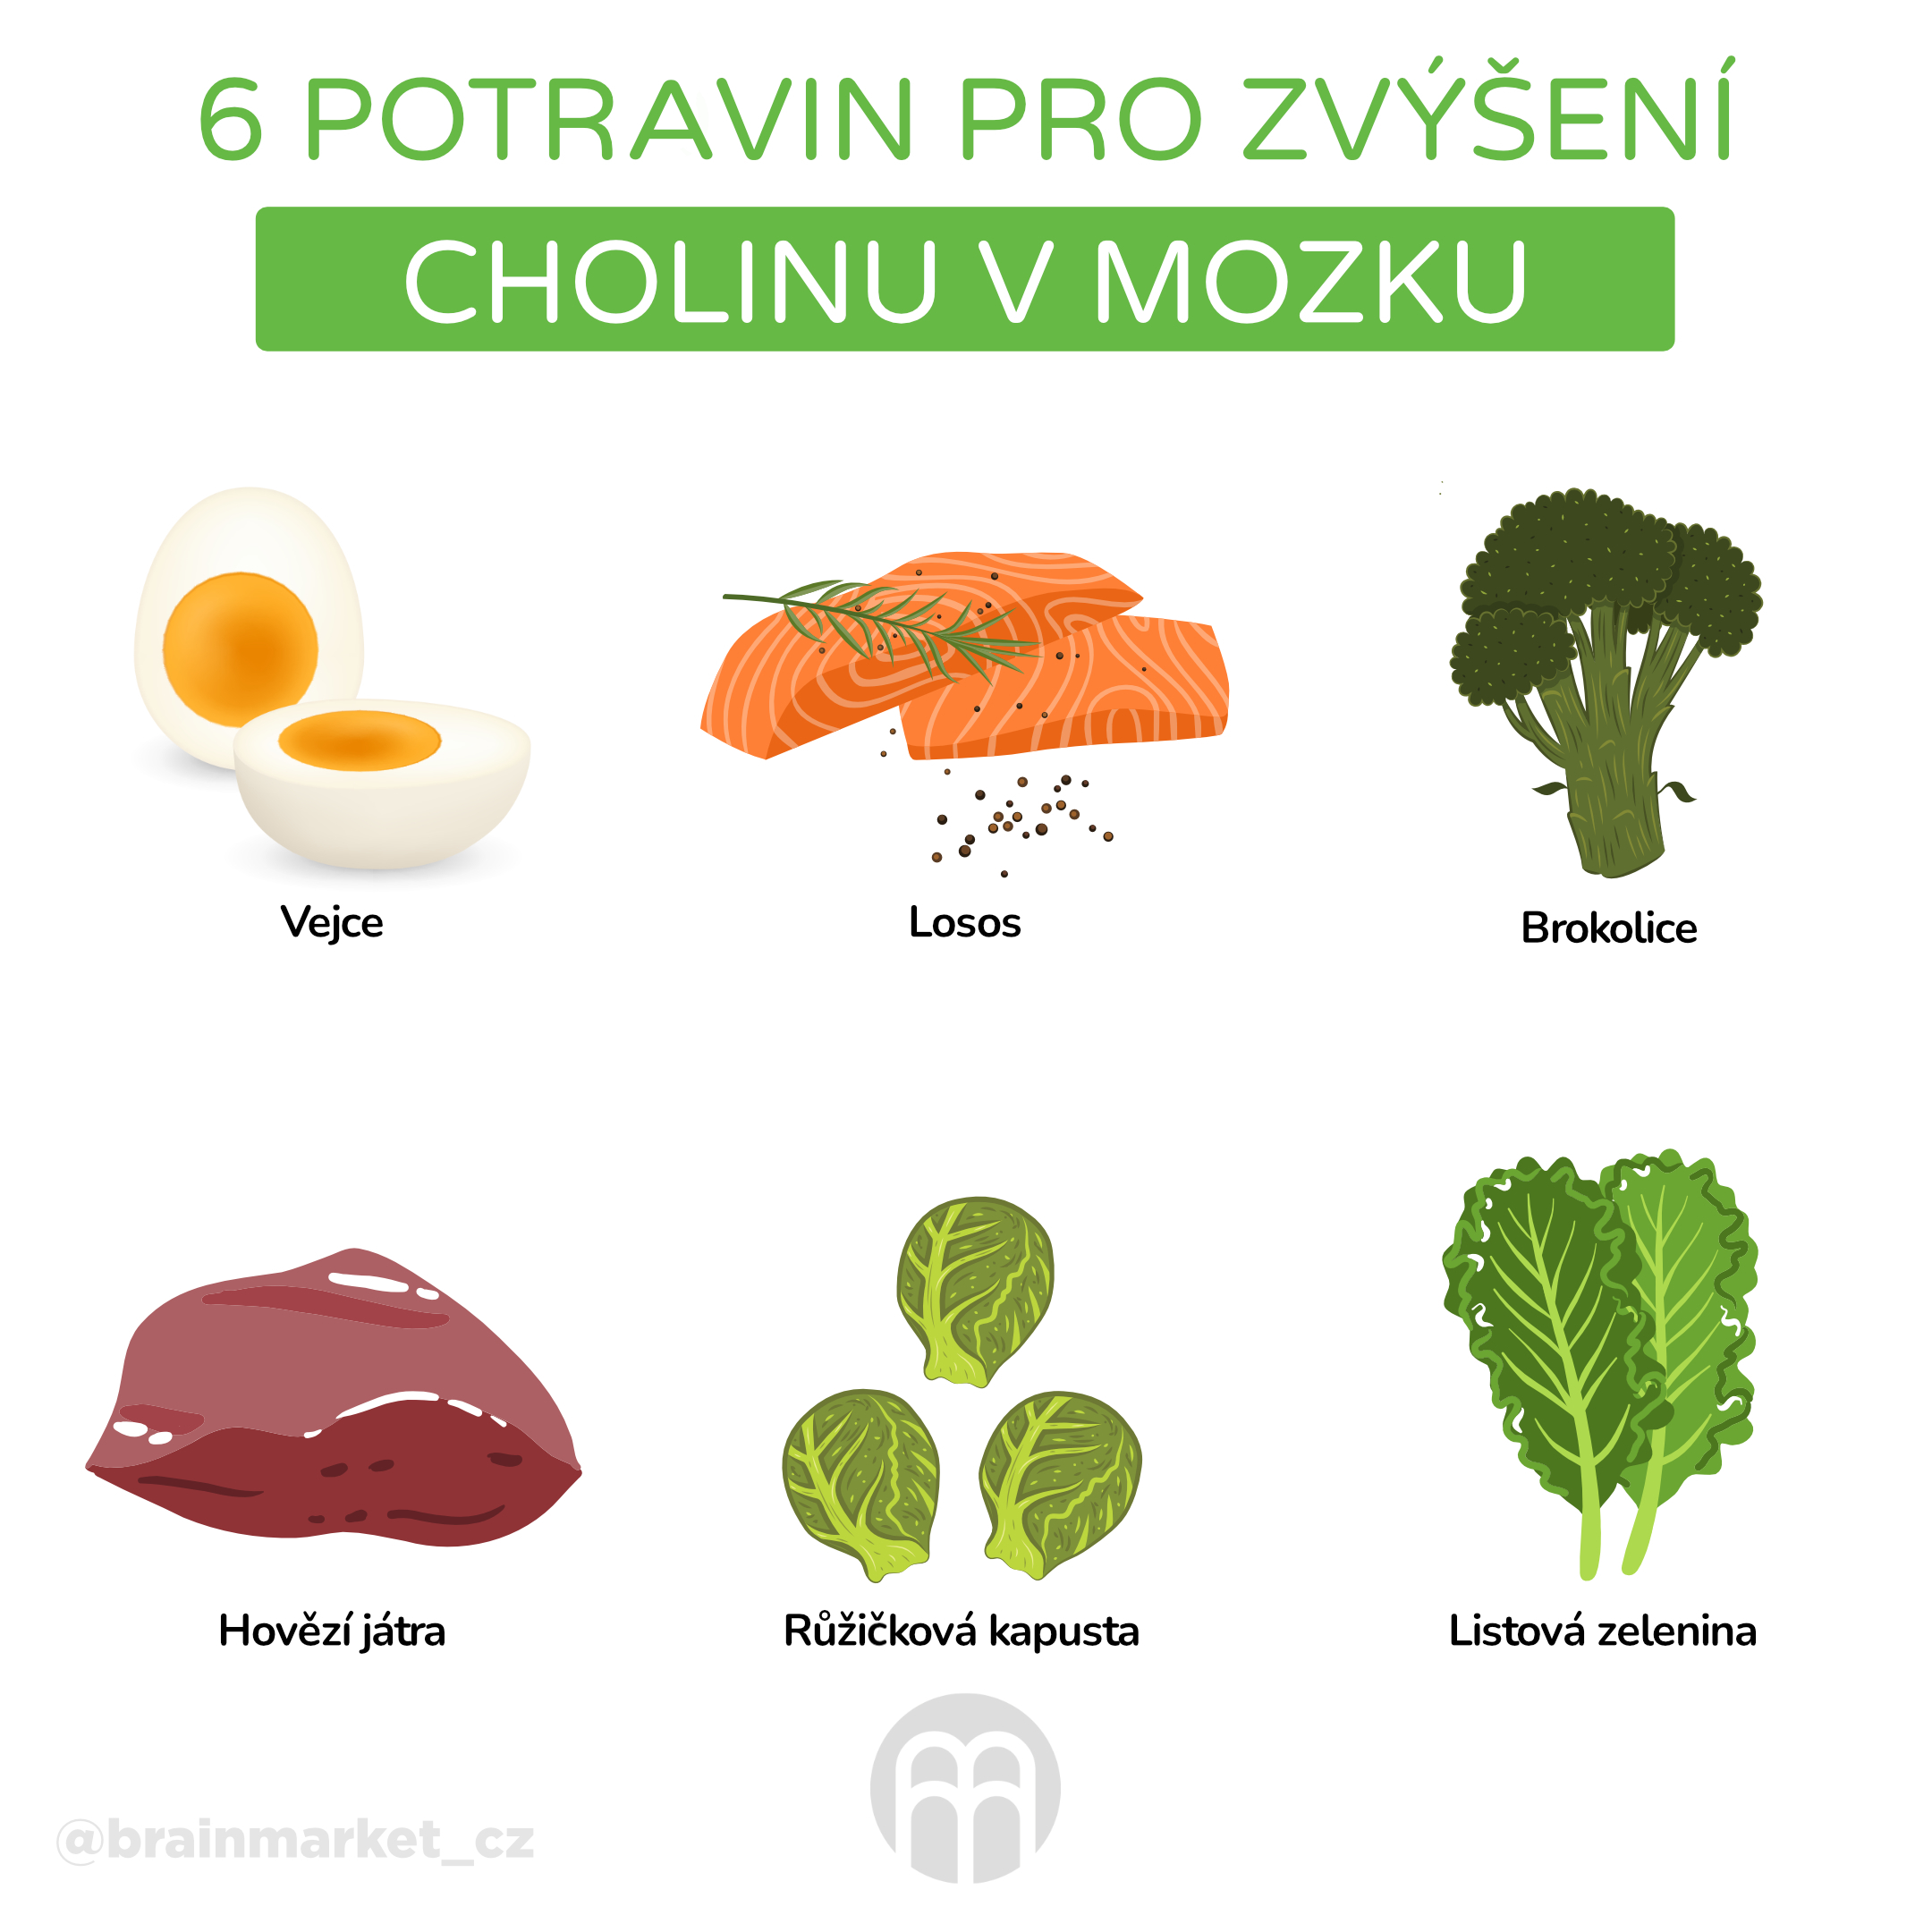 6 potravin pro zvyseni cholinu v mozku_infografika_cz (3)